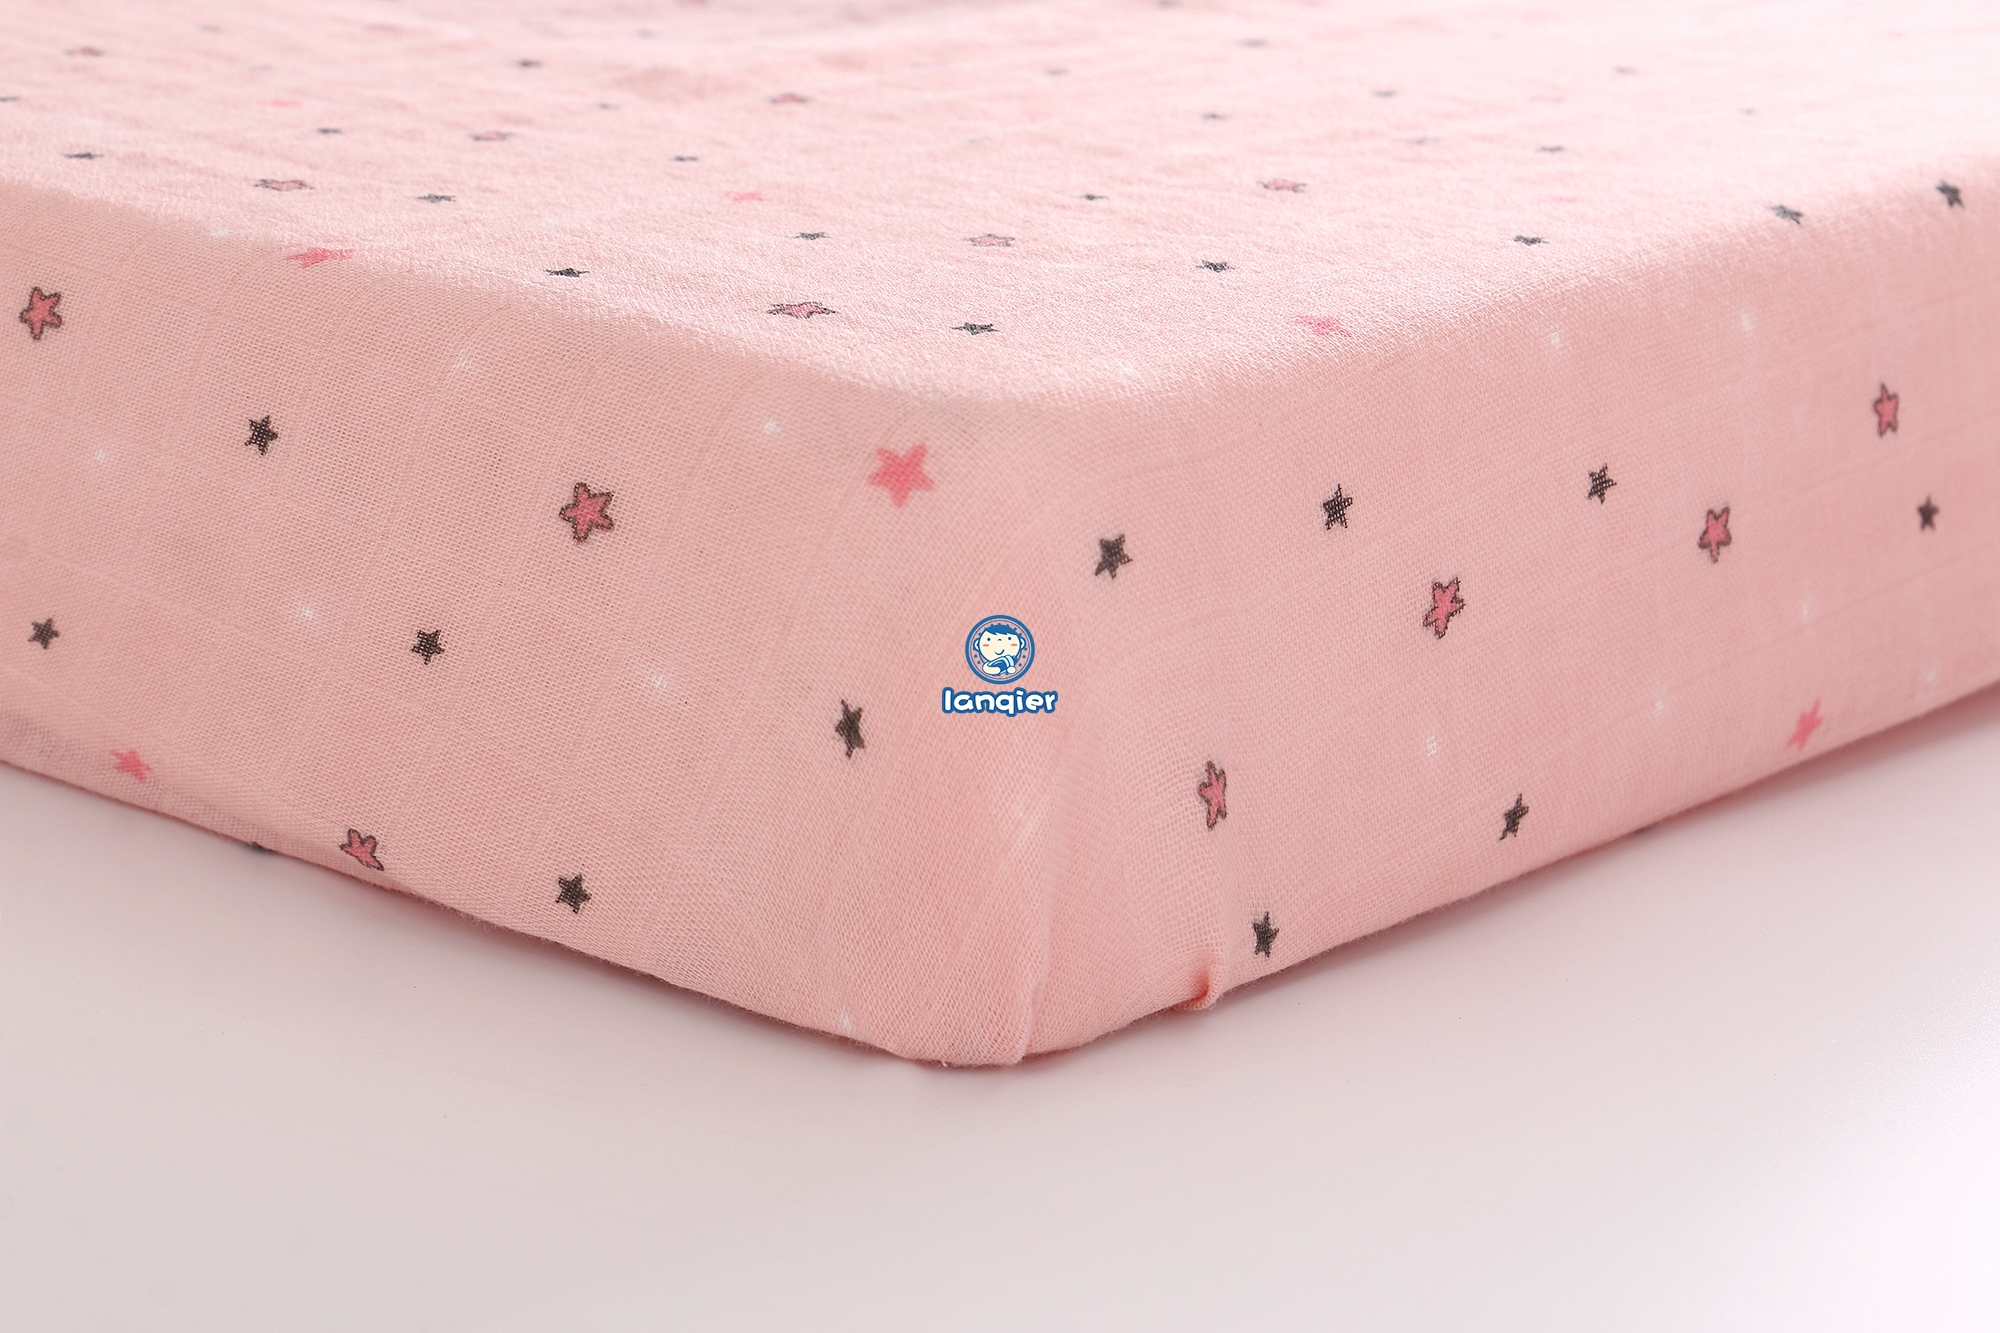 mighty goods crib mattress pad cover